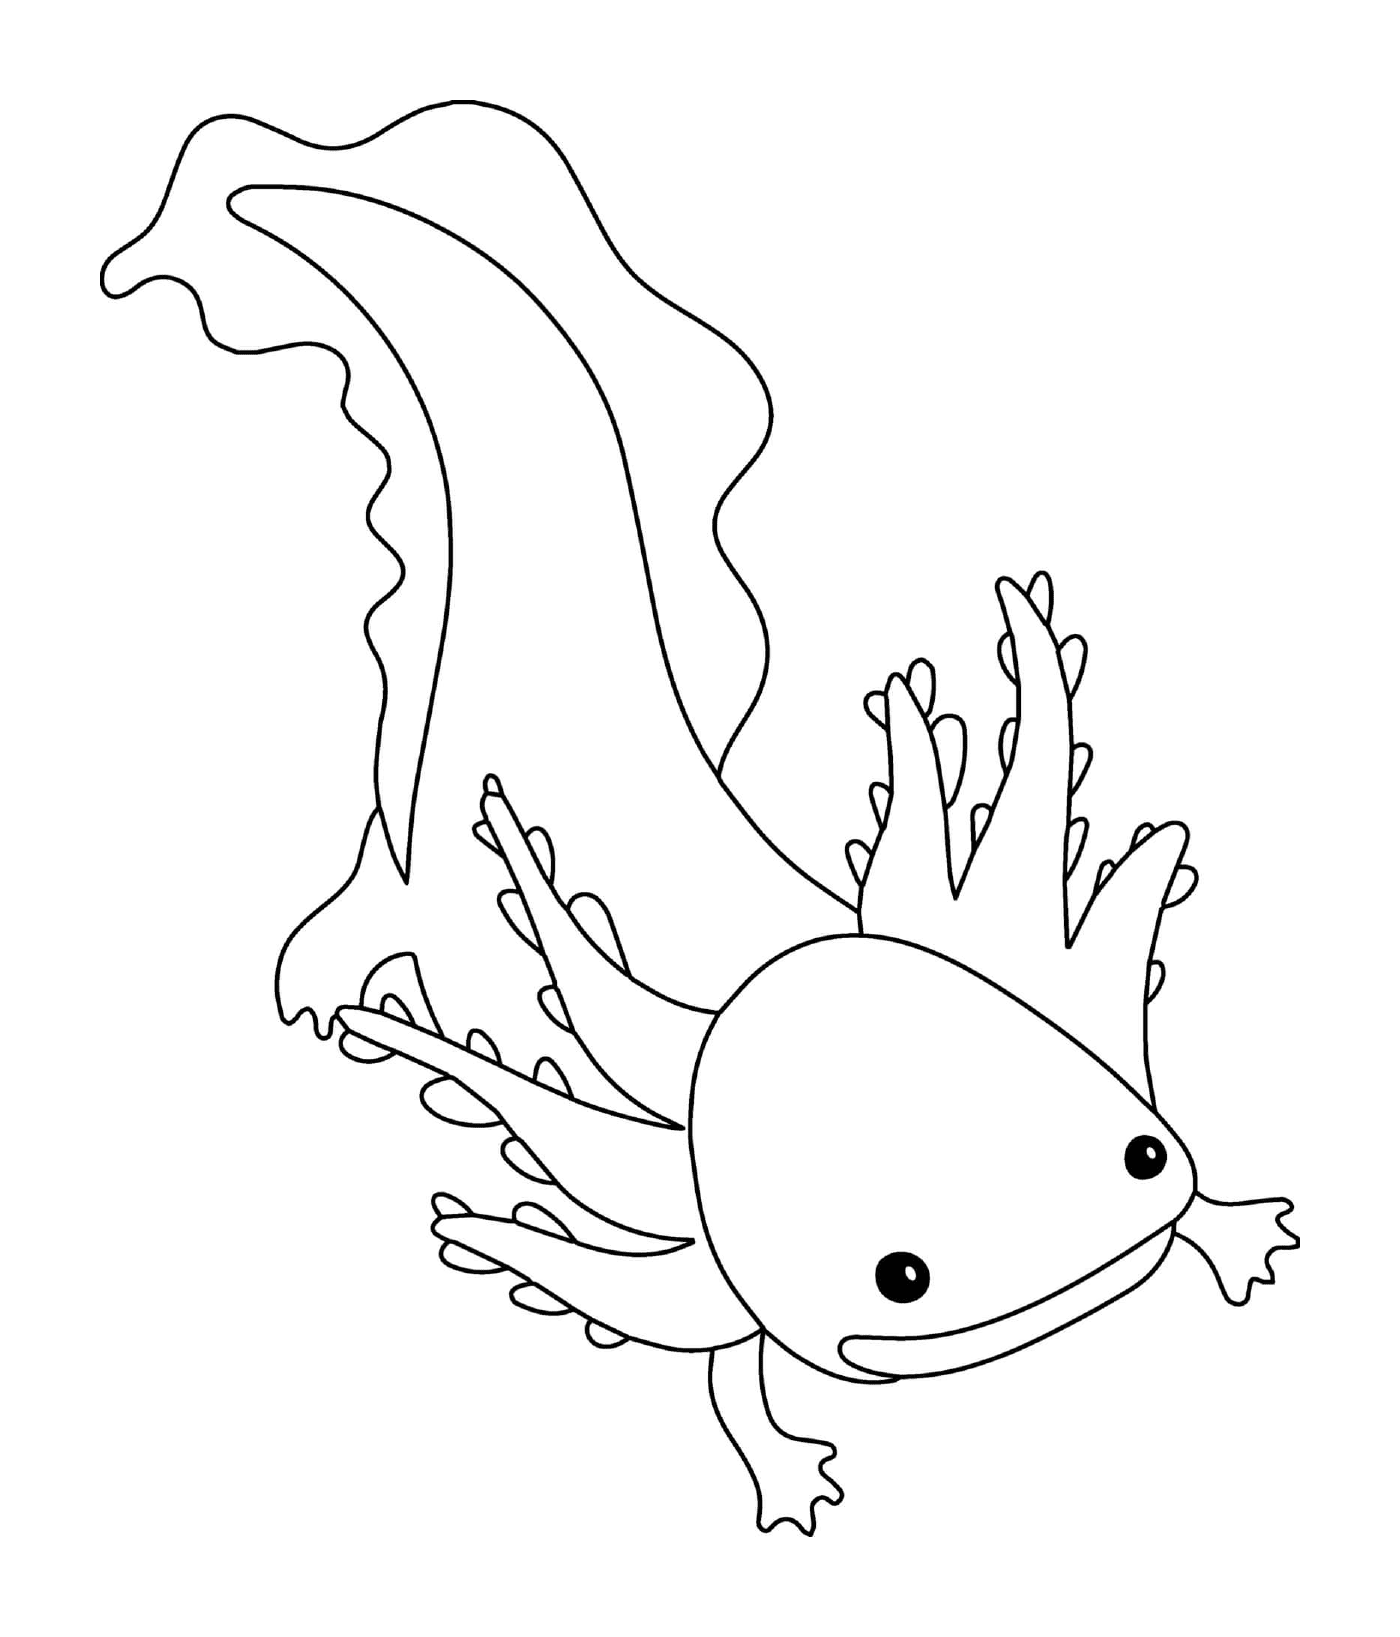  Axolotl mai metamorfosi 